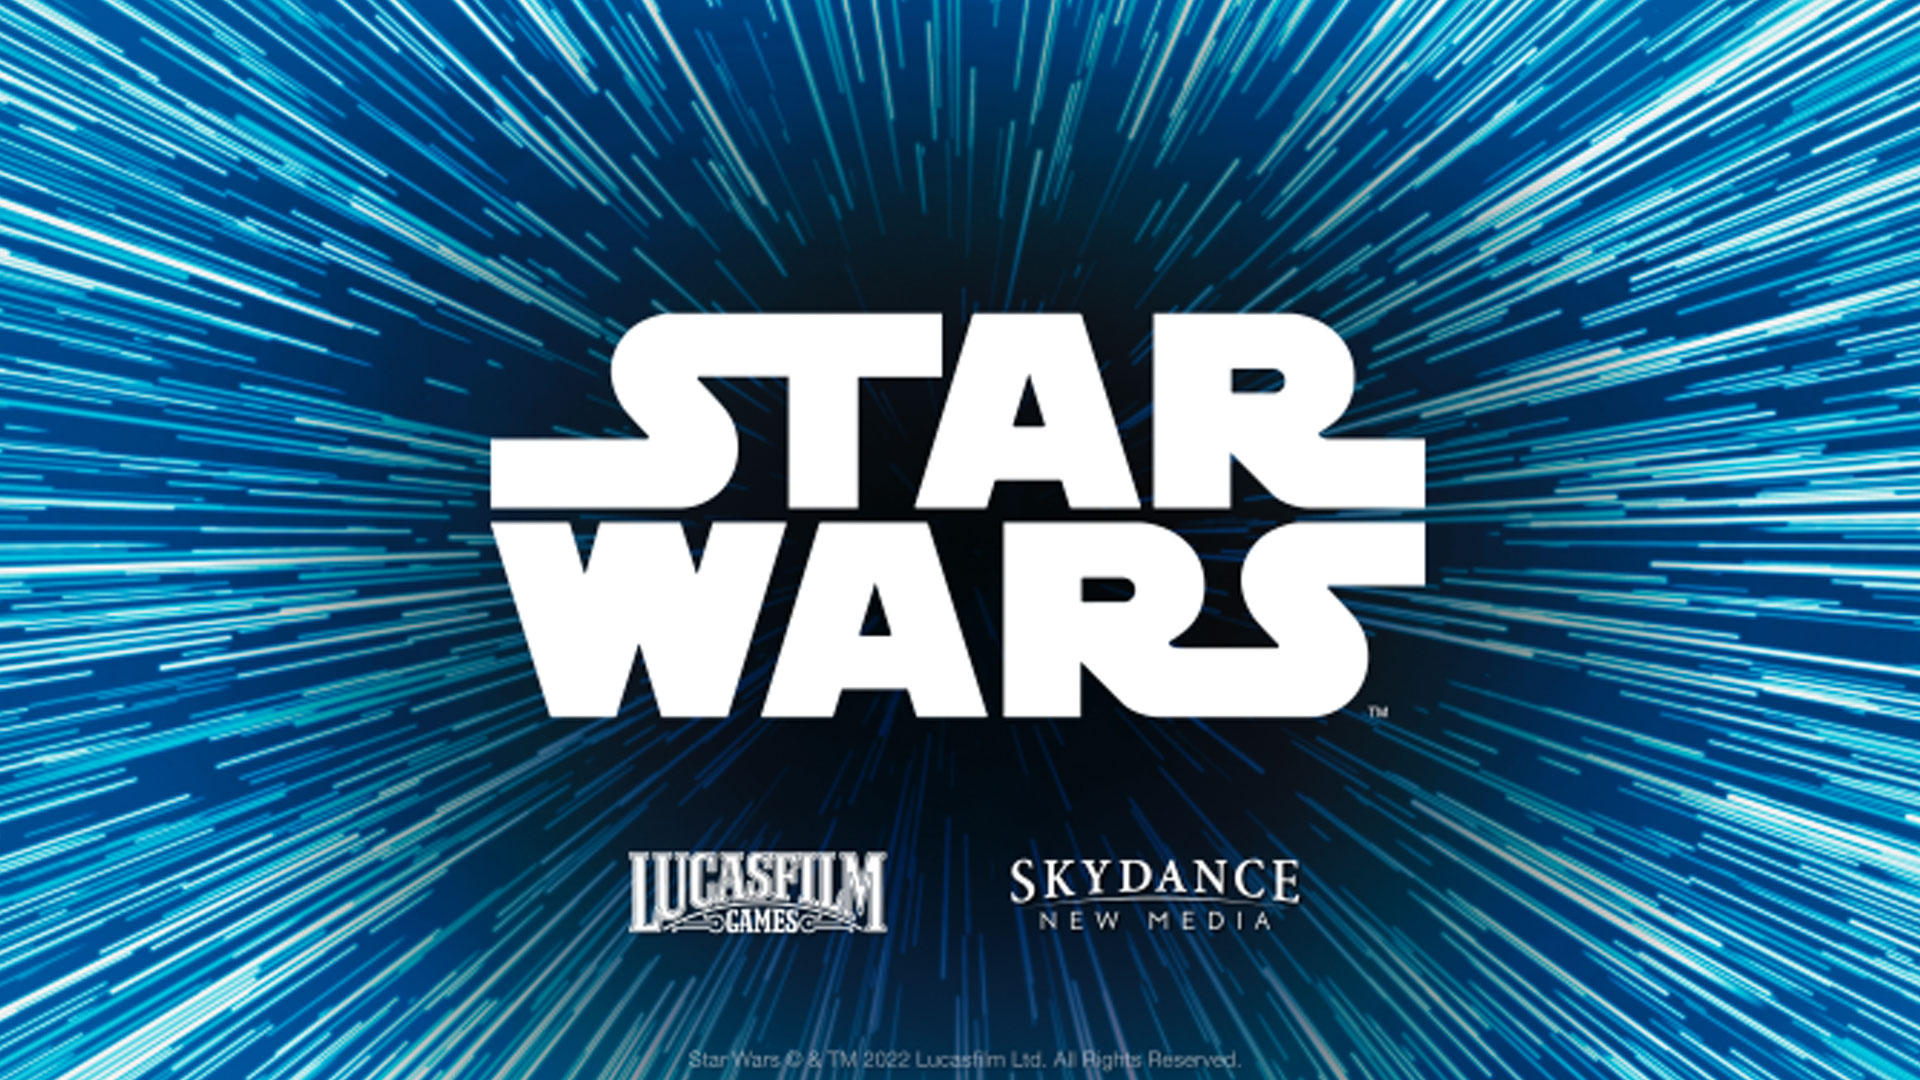 Star Wars logo on a blue background